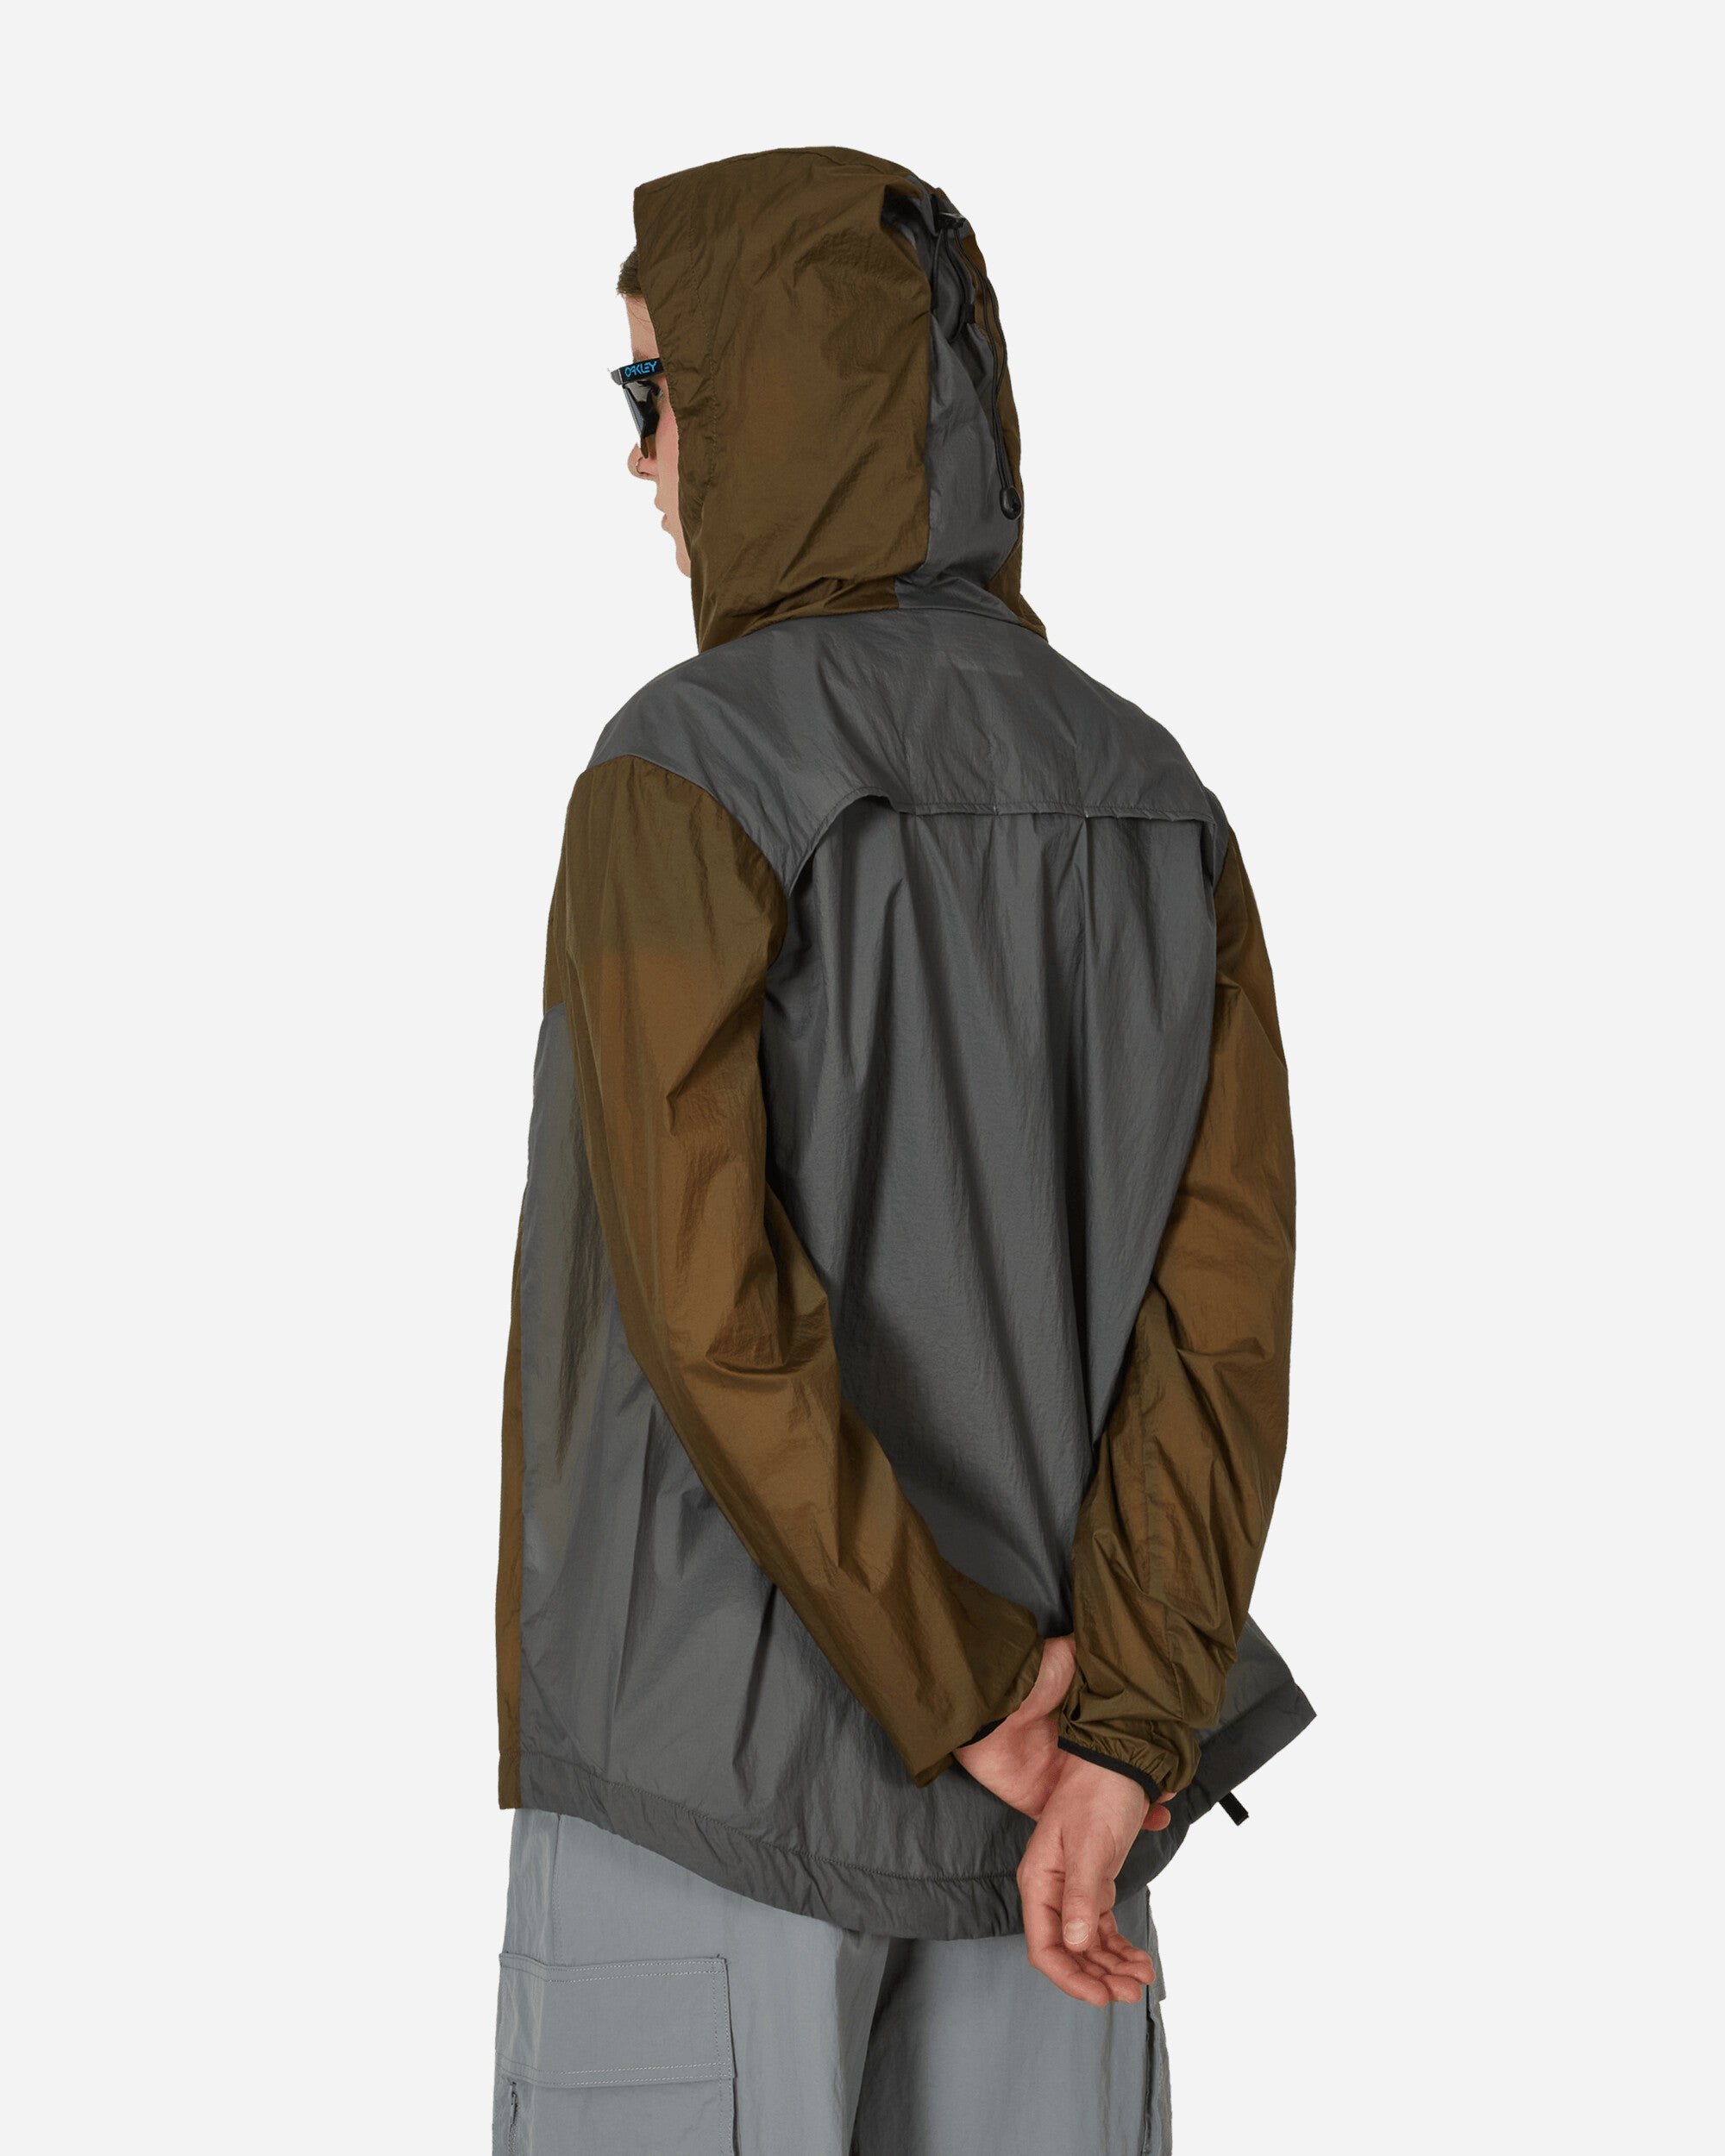 Rayon Vert Mirage Jacket Muddy Charcoal Coats and Jackets Windbreakers RVS2-JK31 001